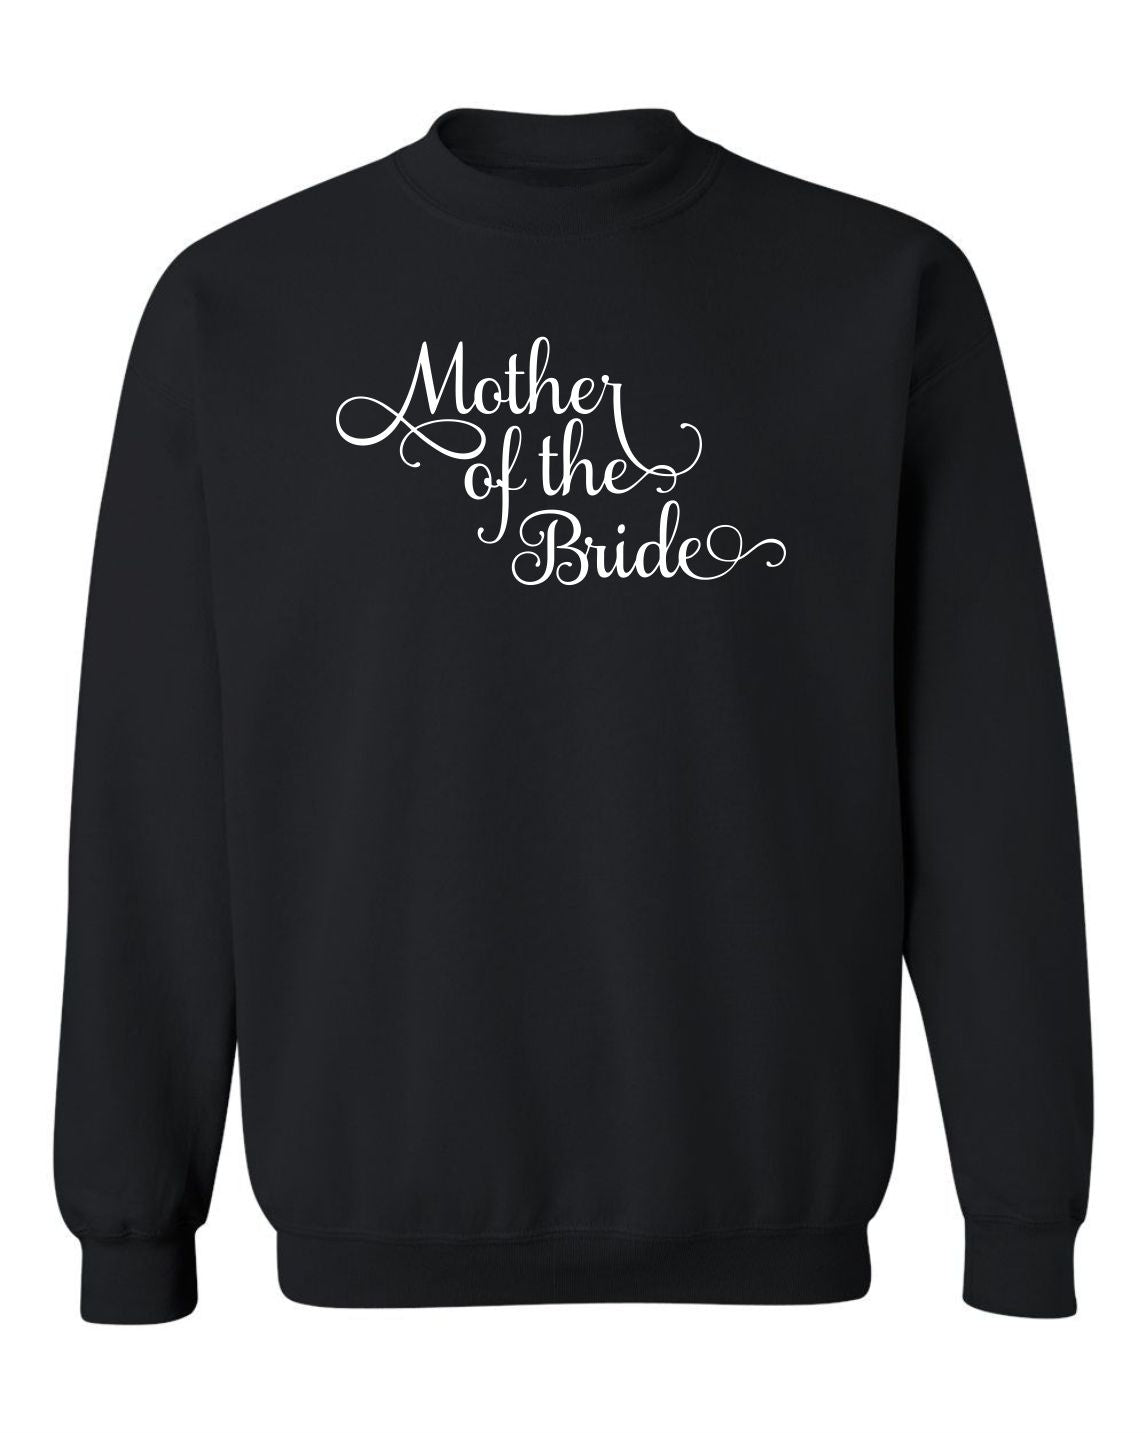 "Mother Of The Bride" (Swirl Design) Unisex Crewneck Sweatshirt